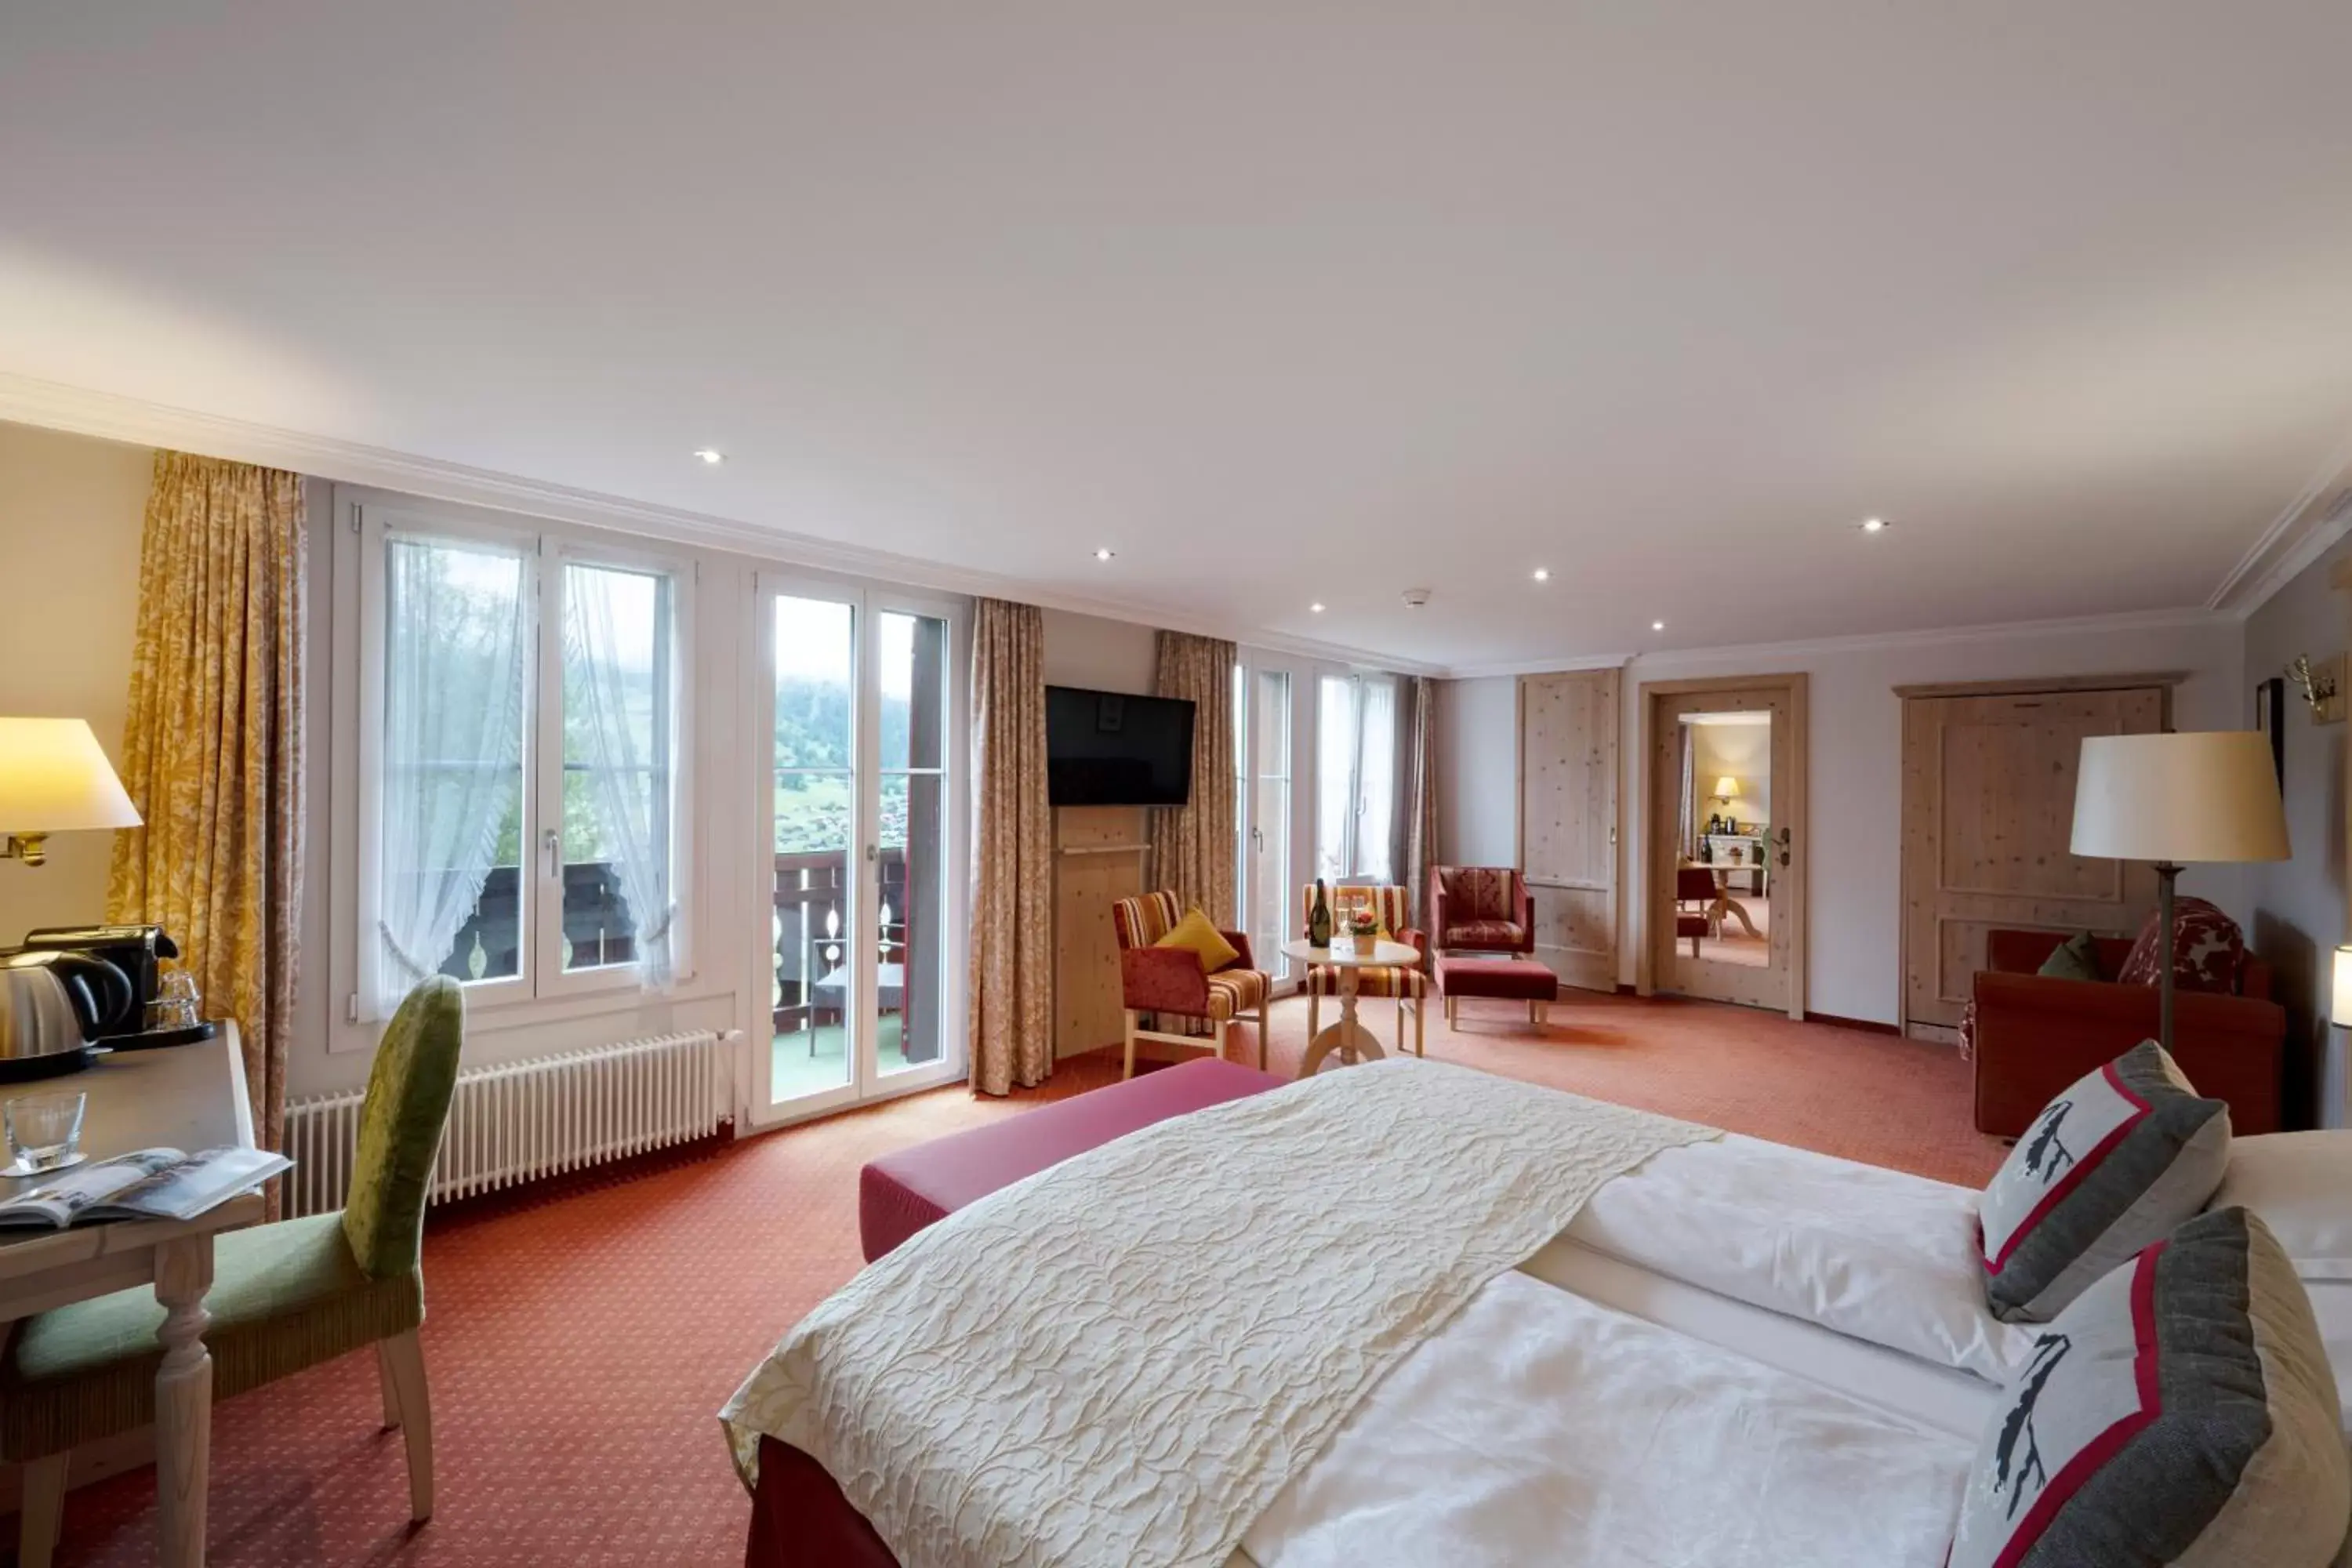 Photo of the whole room in Romantik Hotel Schweizerhof